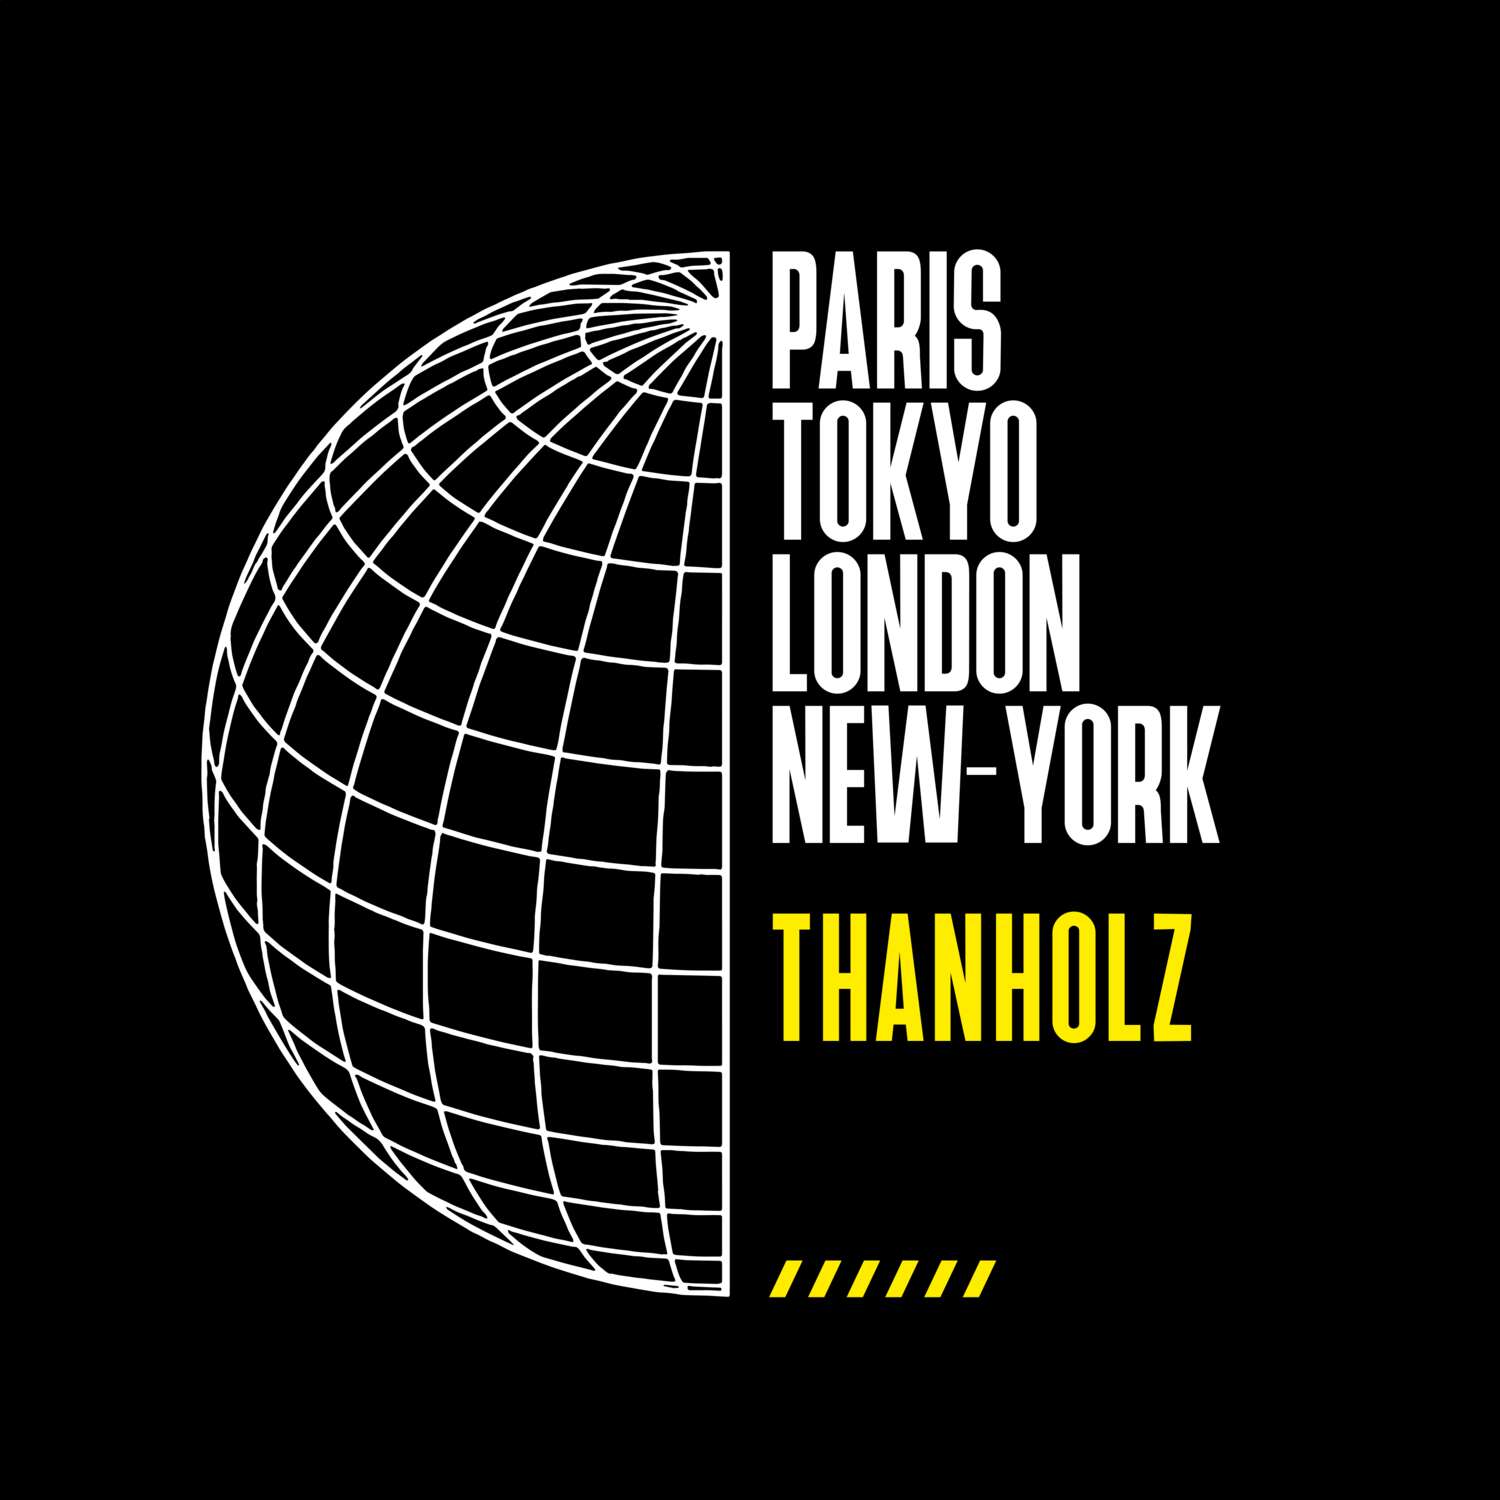 Thanholz T-Shirt »Paris Tokyo London«